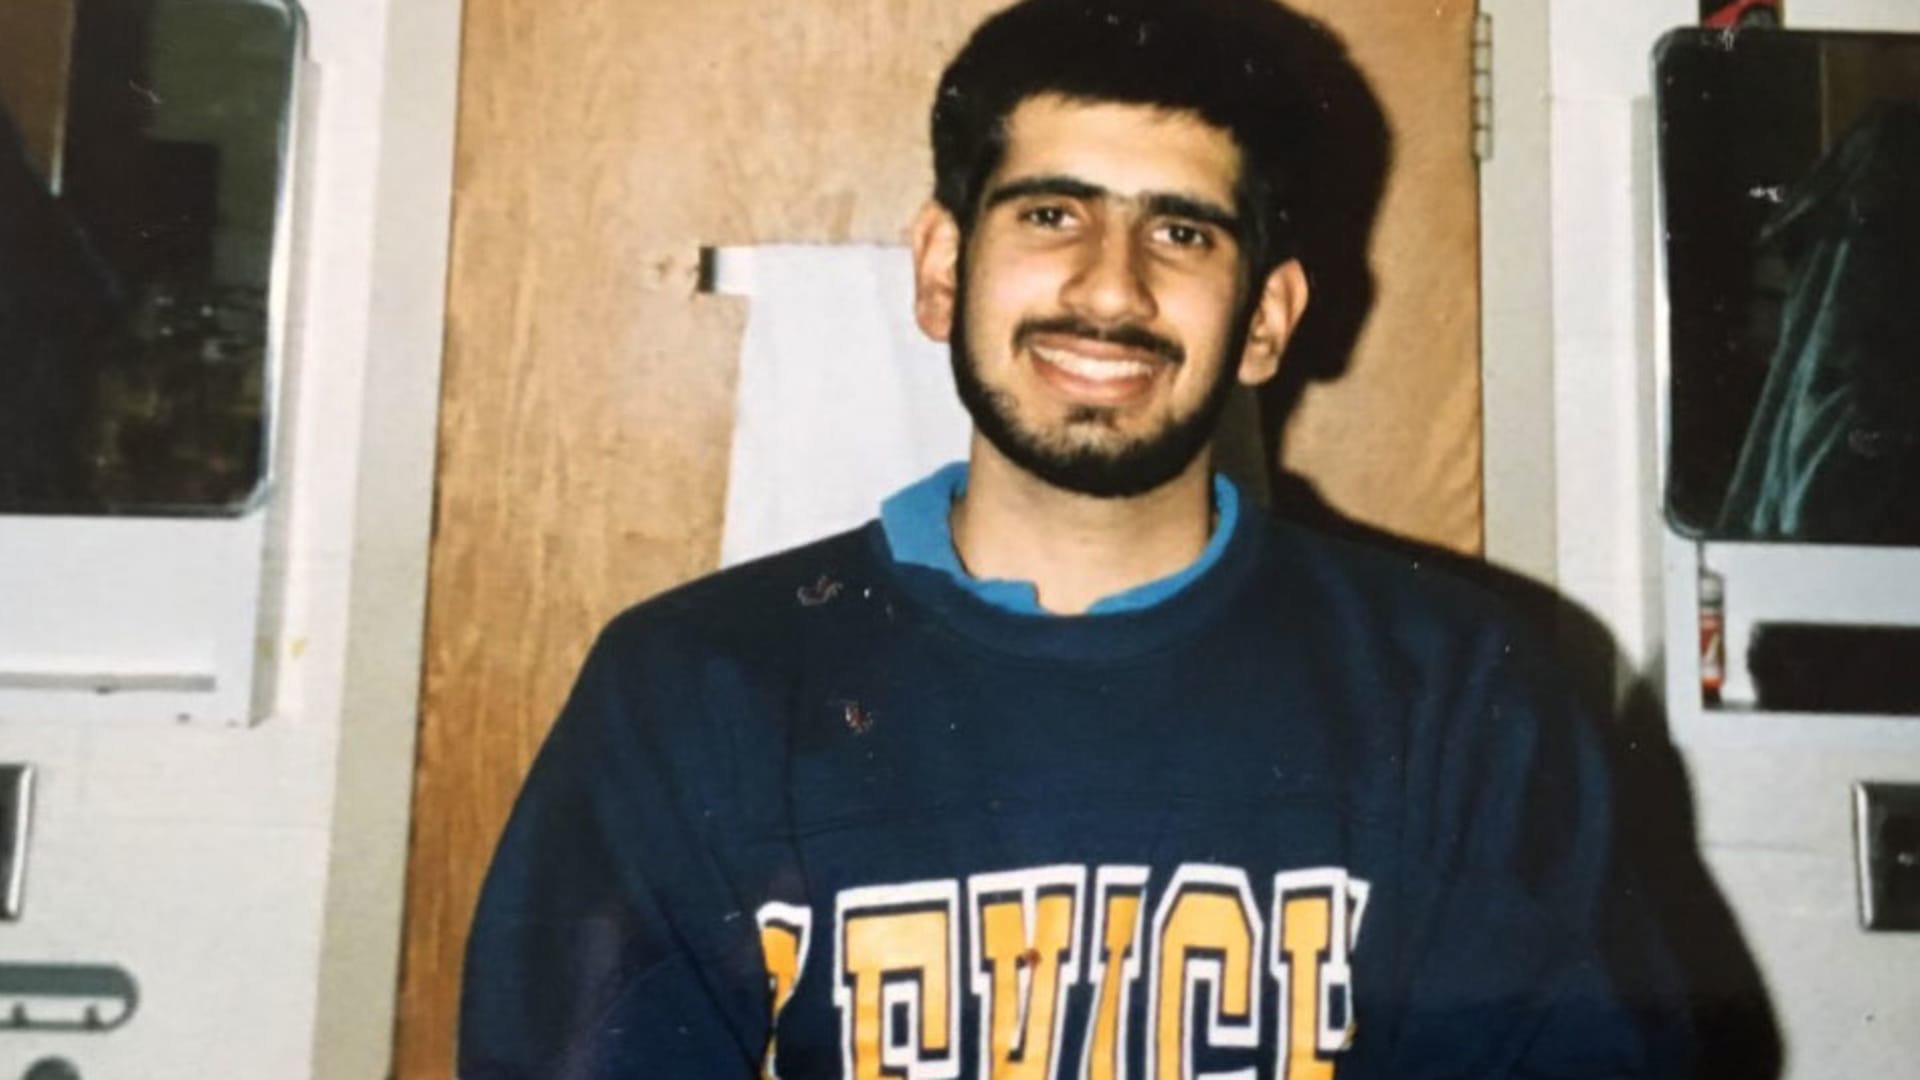 Sarat Sethi during his time at Lehigh University. He graduated in 1992.